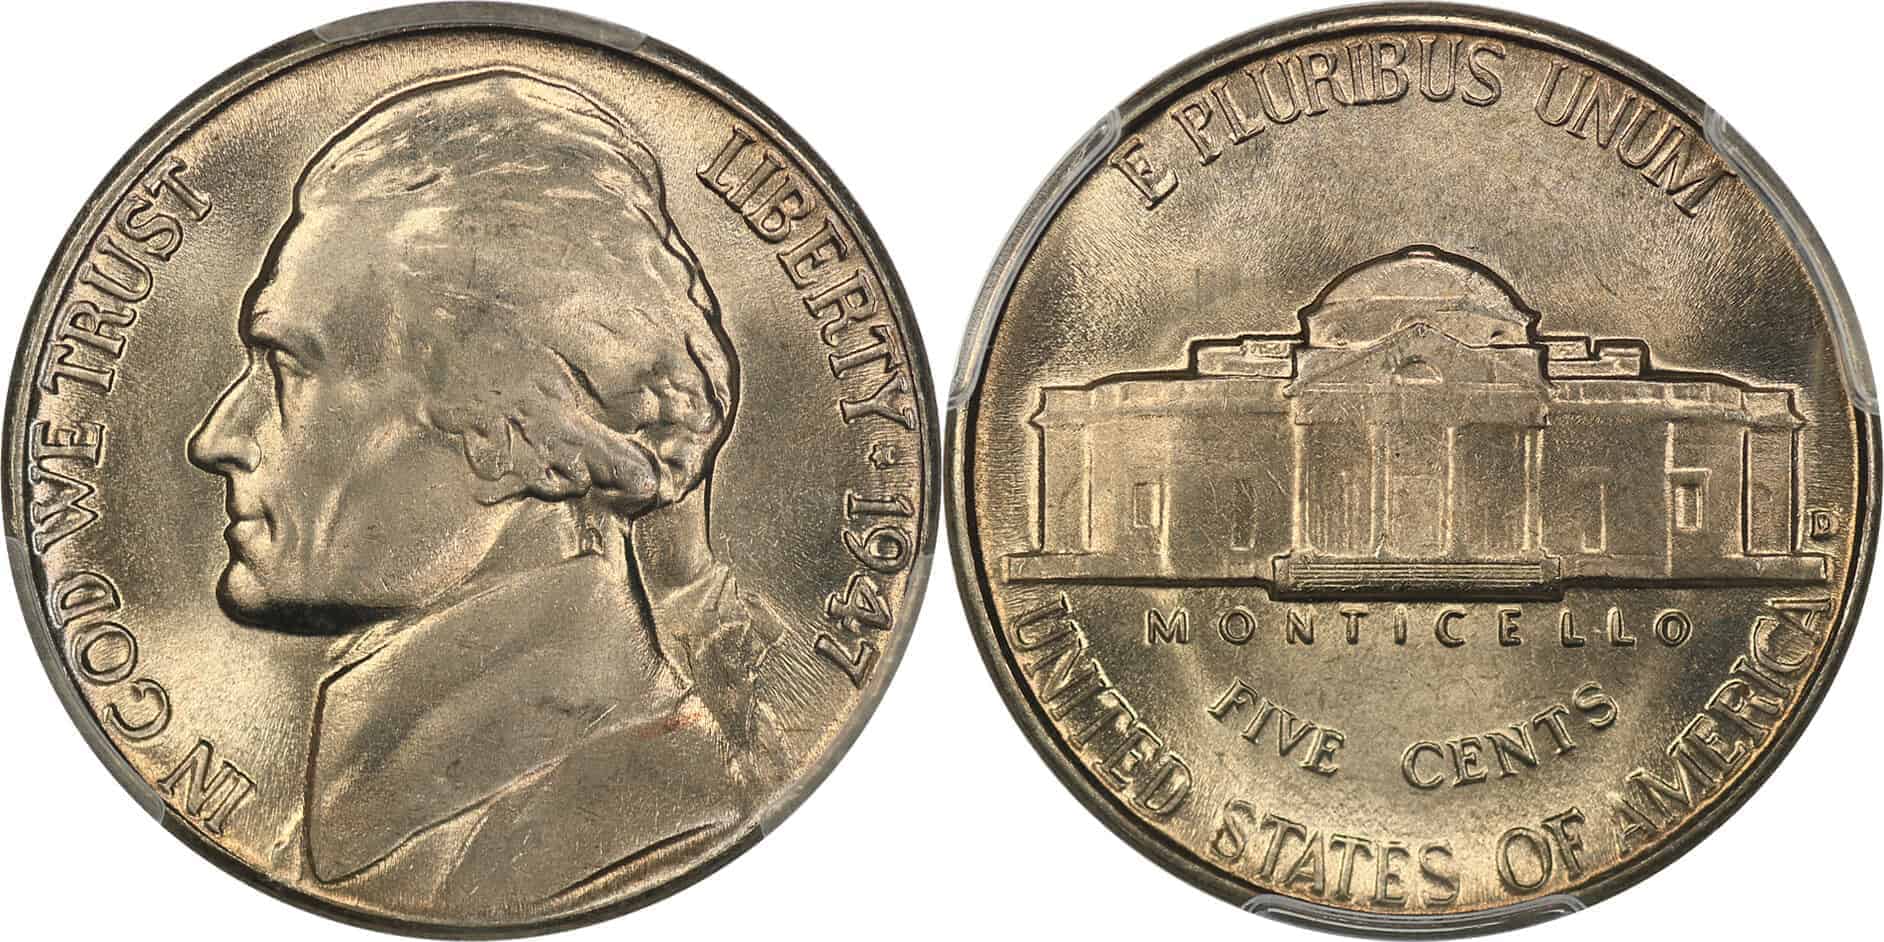 1947 Nickel Details